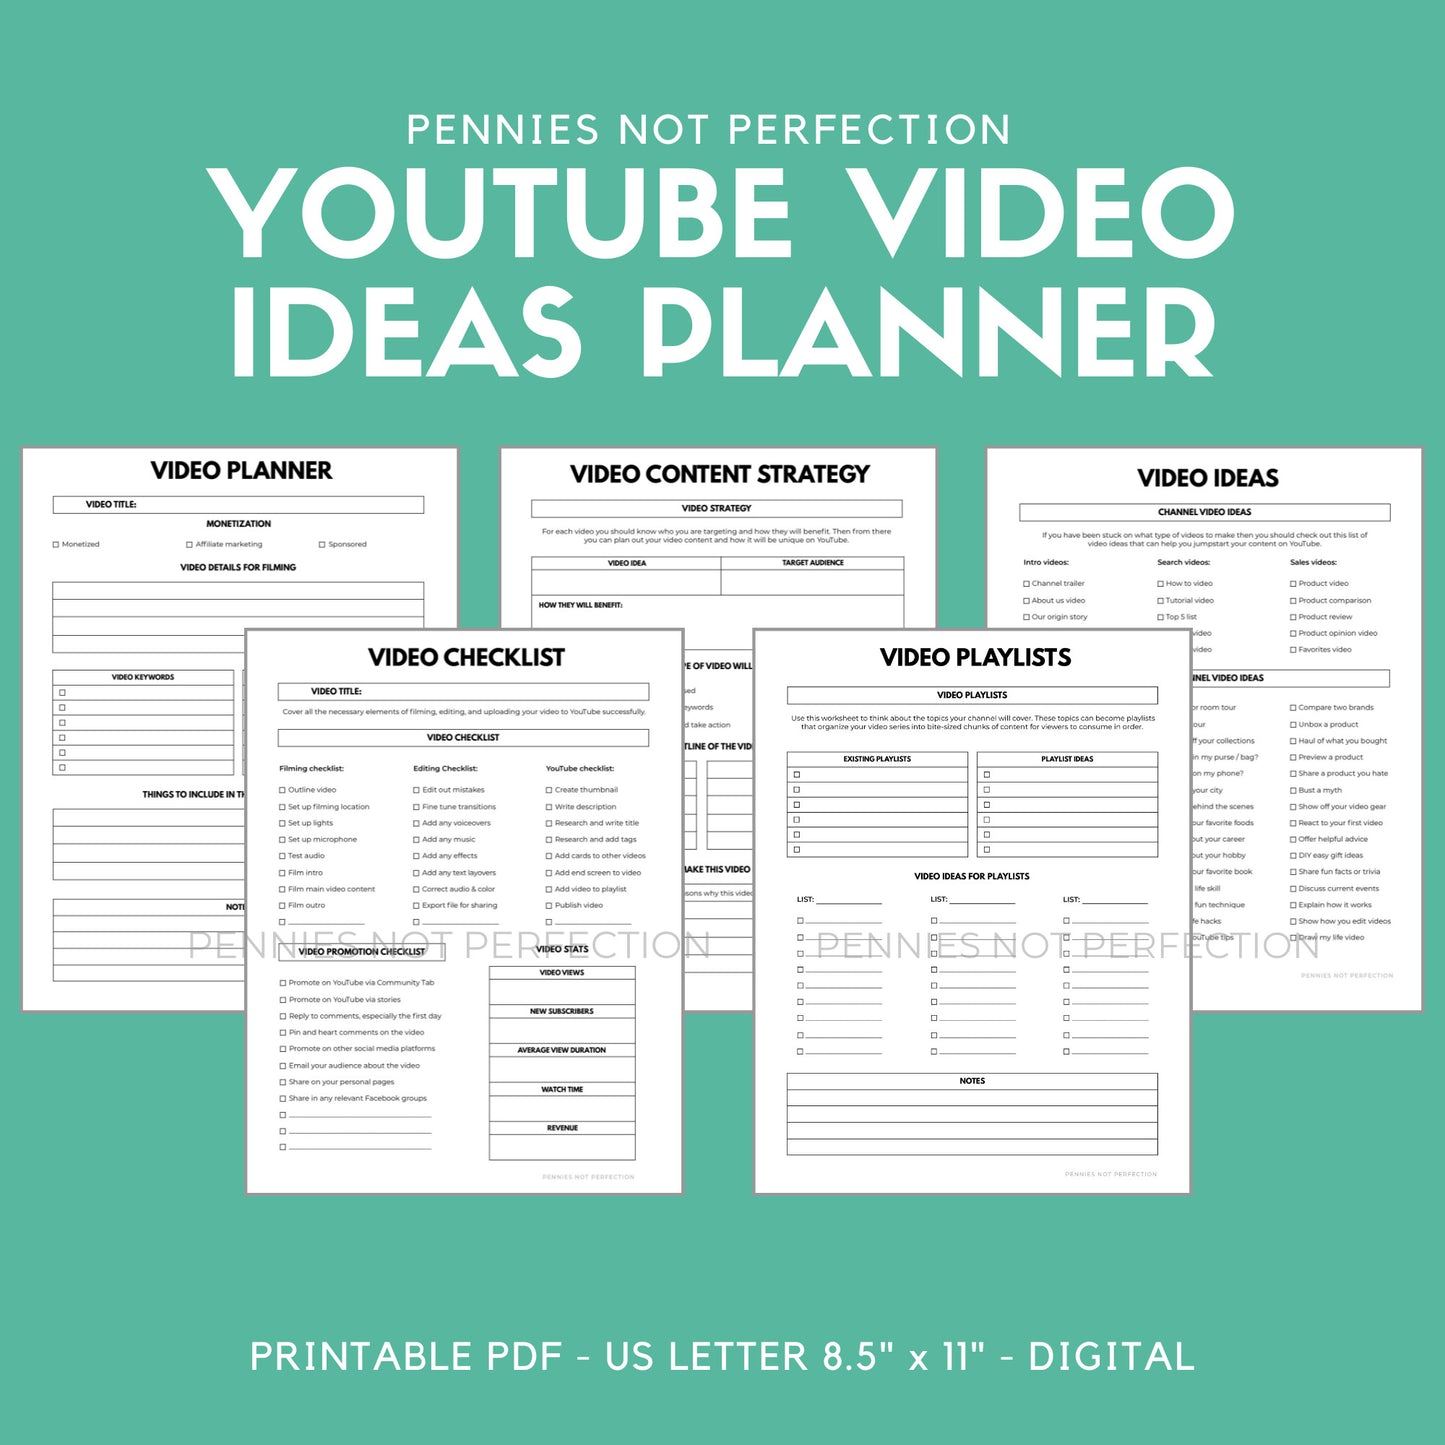 YouTube Video Ideas Planner | Video Series Planner & Checklist Printable | Video Content Ideas Planner 10